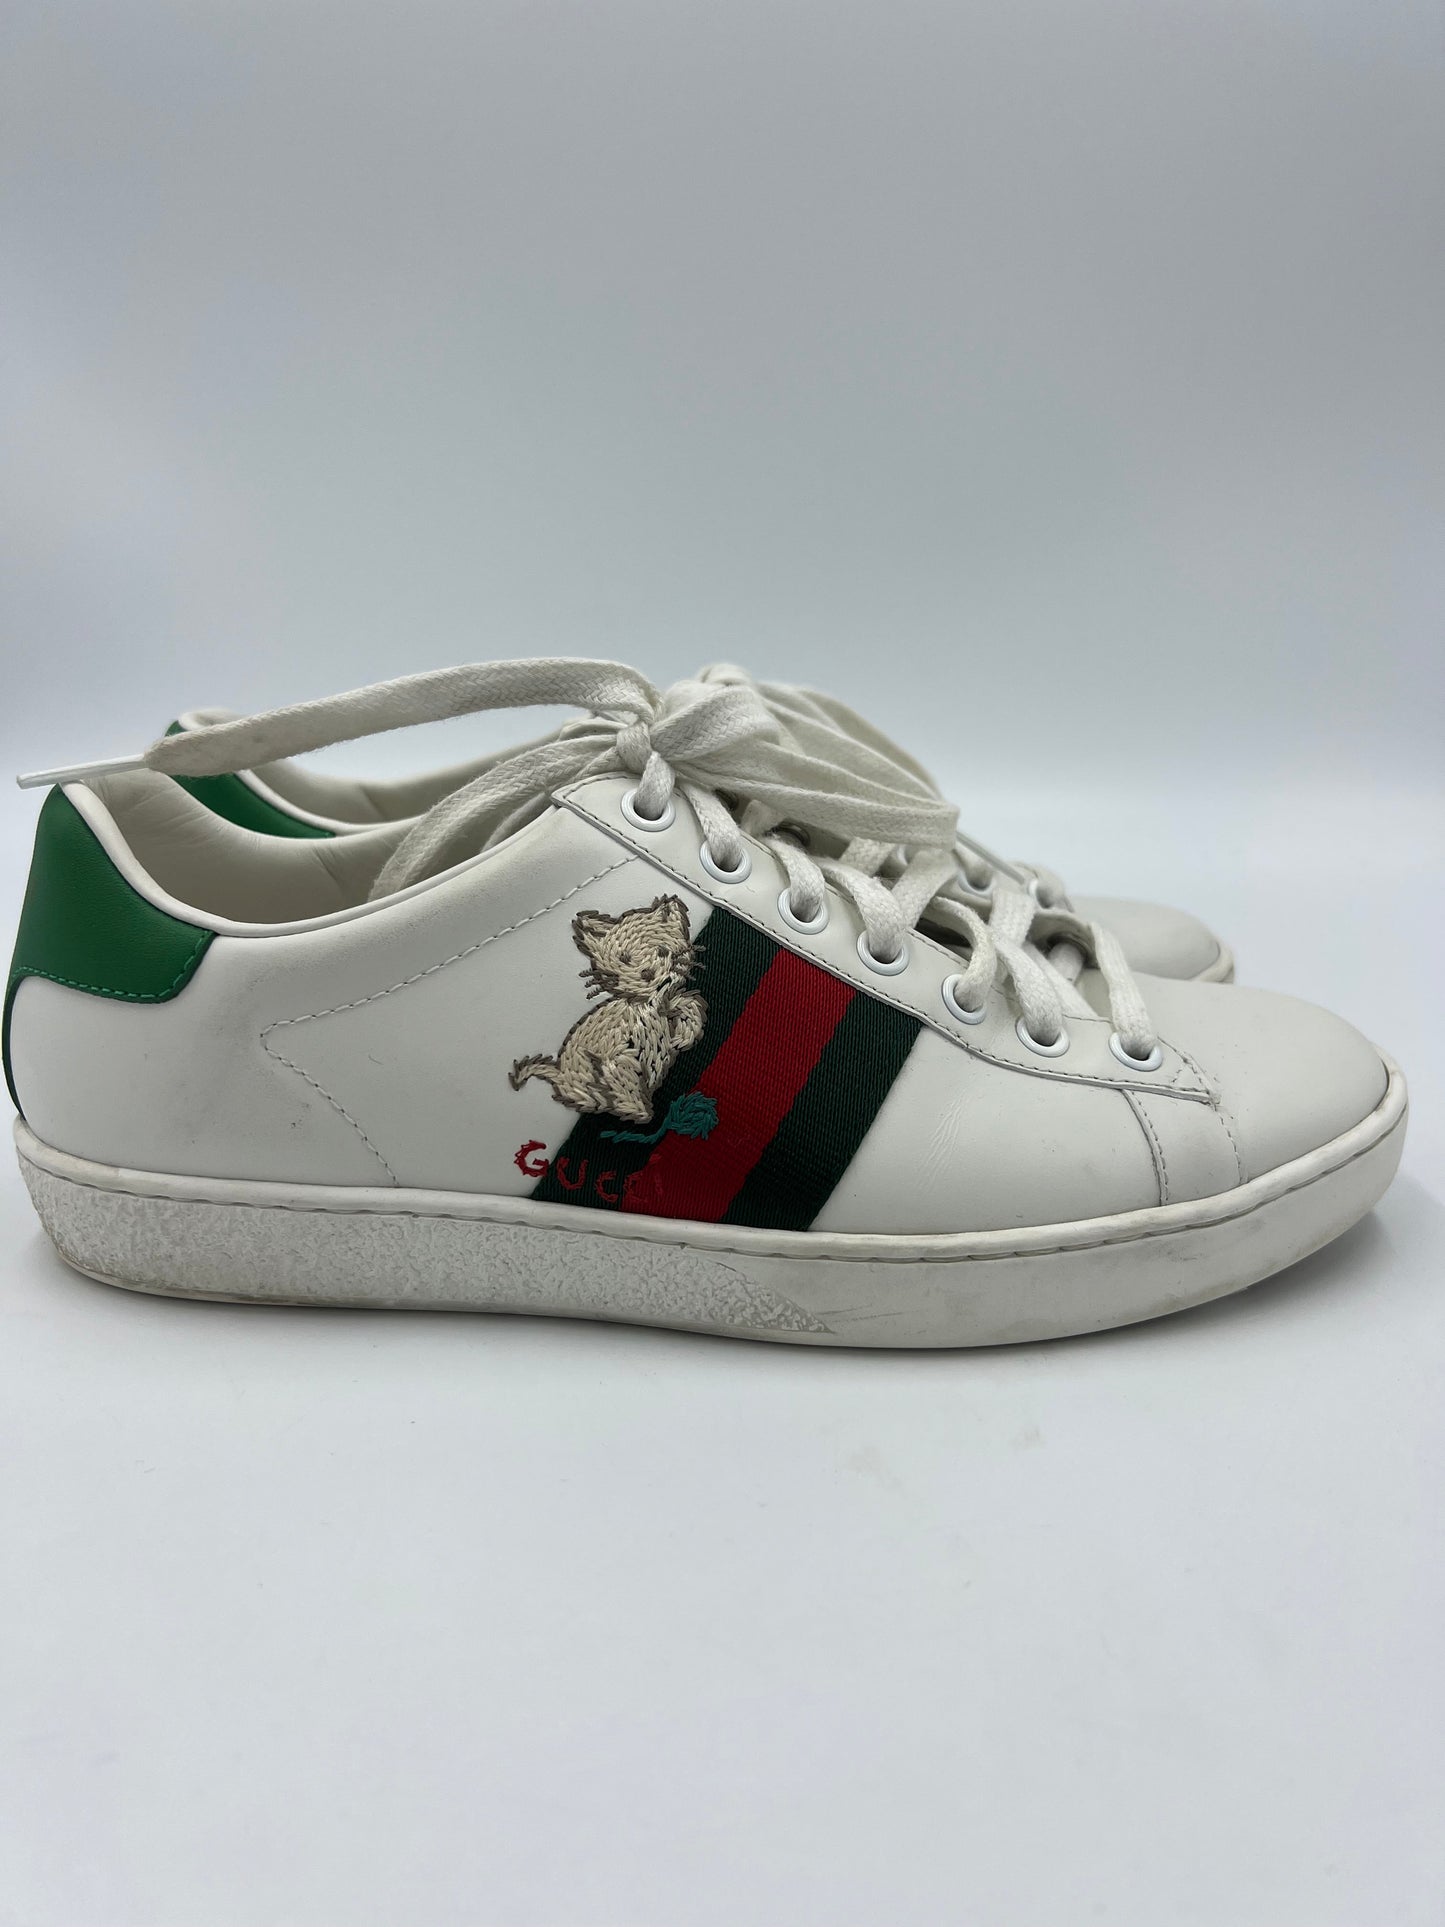 Gucci Ace Kitten Sneakers   Size: 6